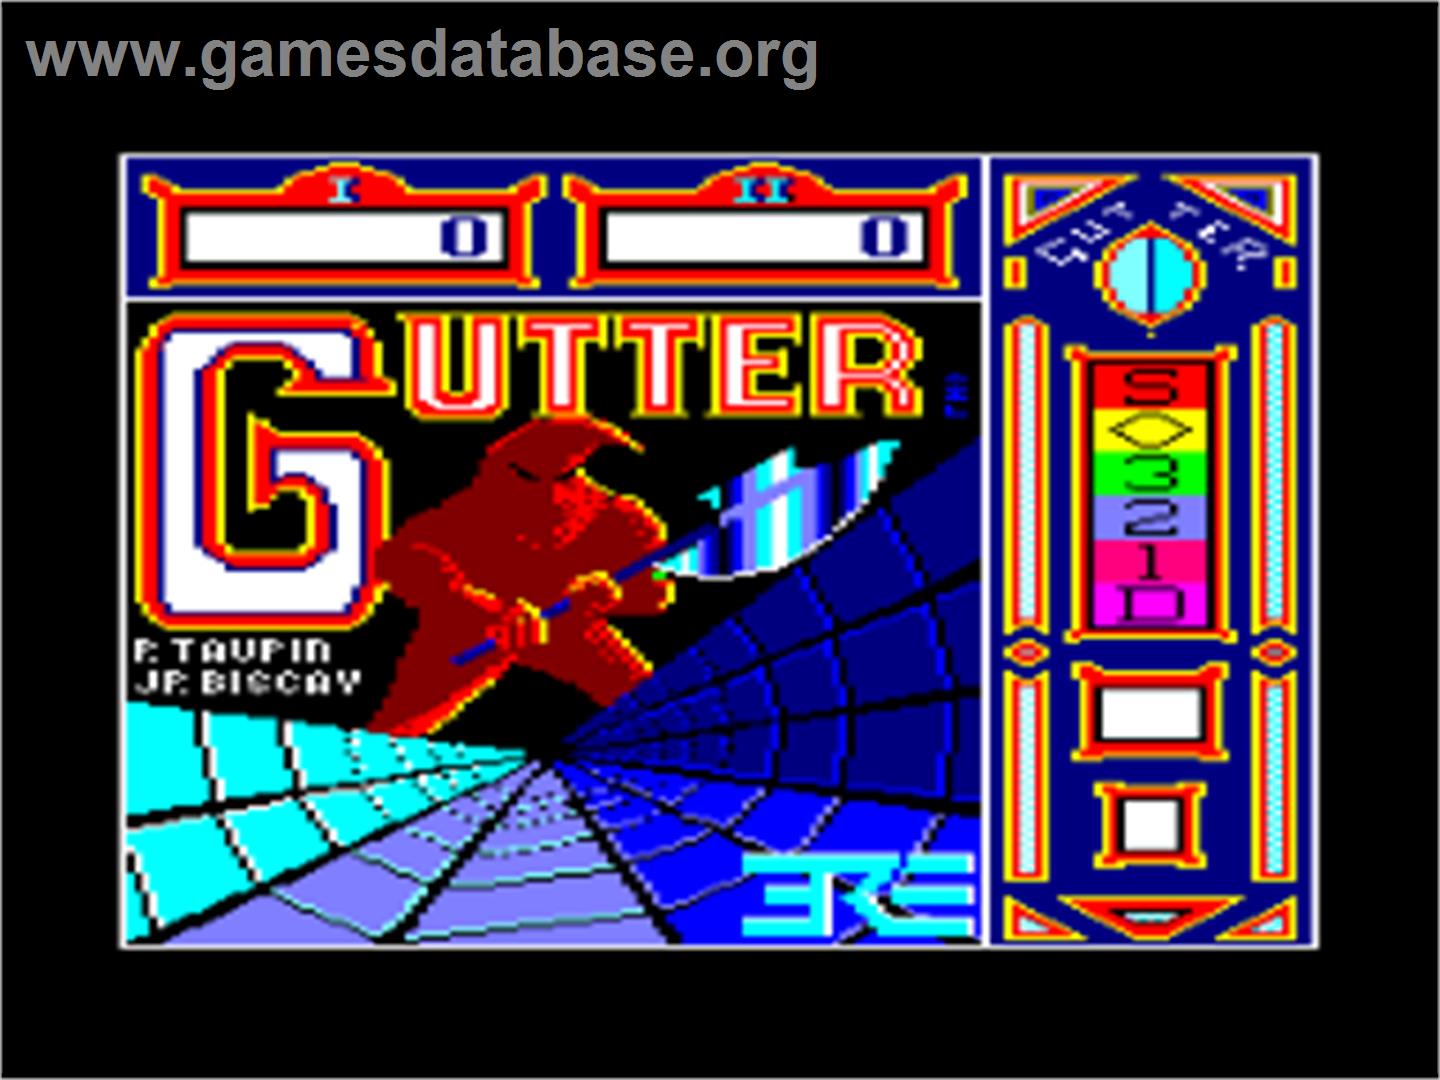 Gutter - Amstrad CPC - Artwork - Title Screen